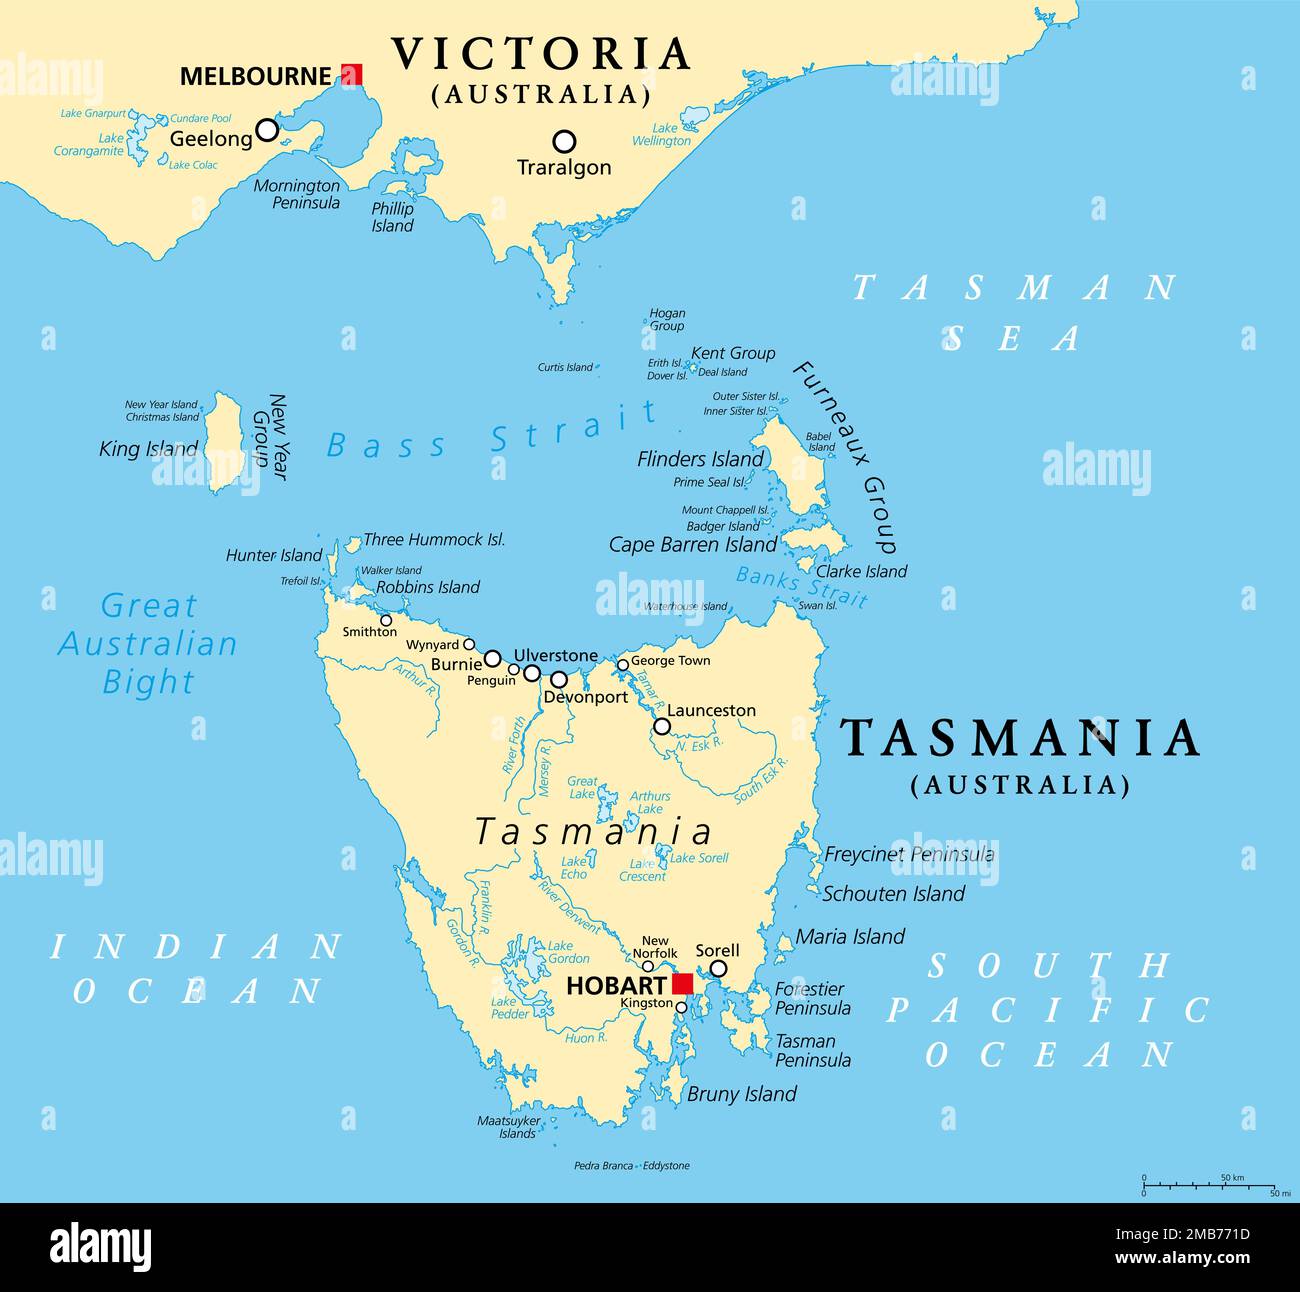 Tasmania and the surrounding area, political map. Australian island state with capital Hobart, south of state Victoria and of the Australian mainland. Stock Photo